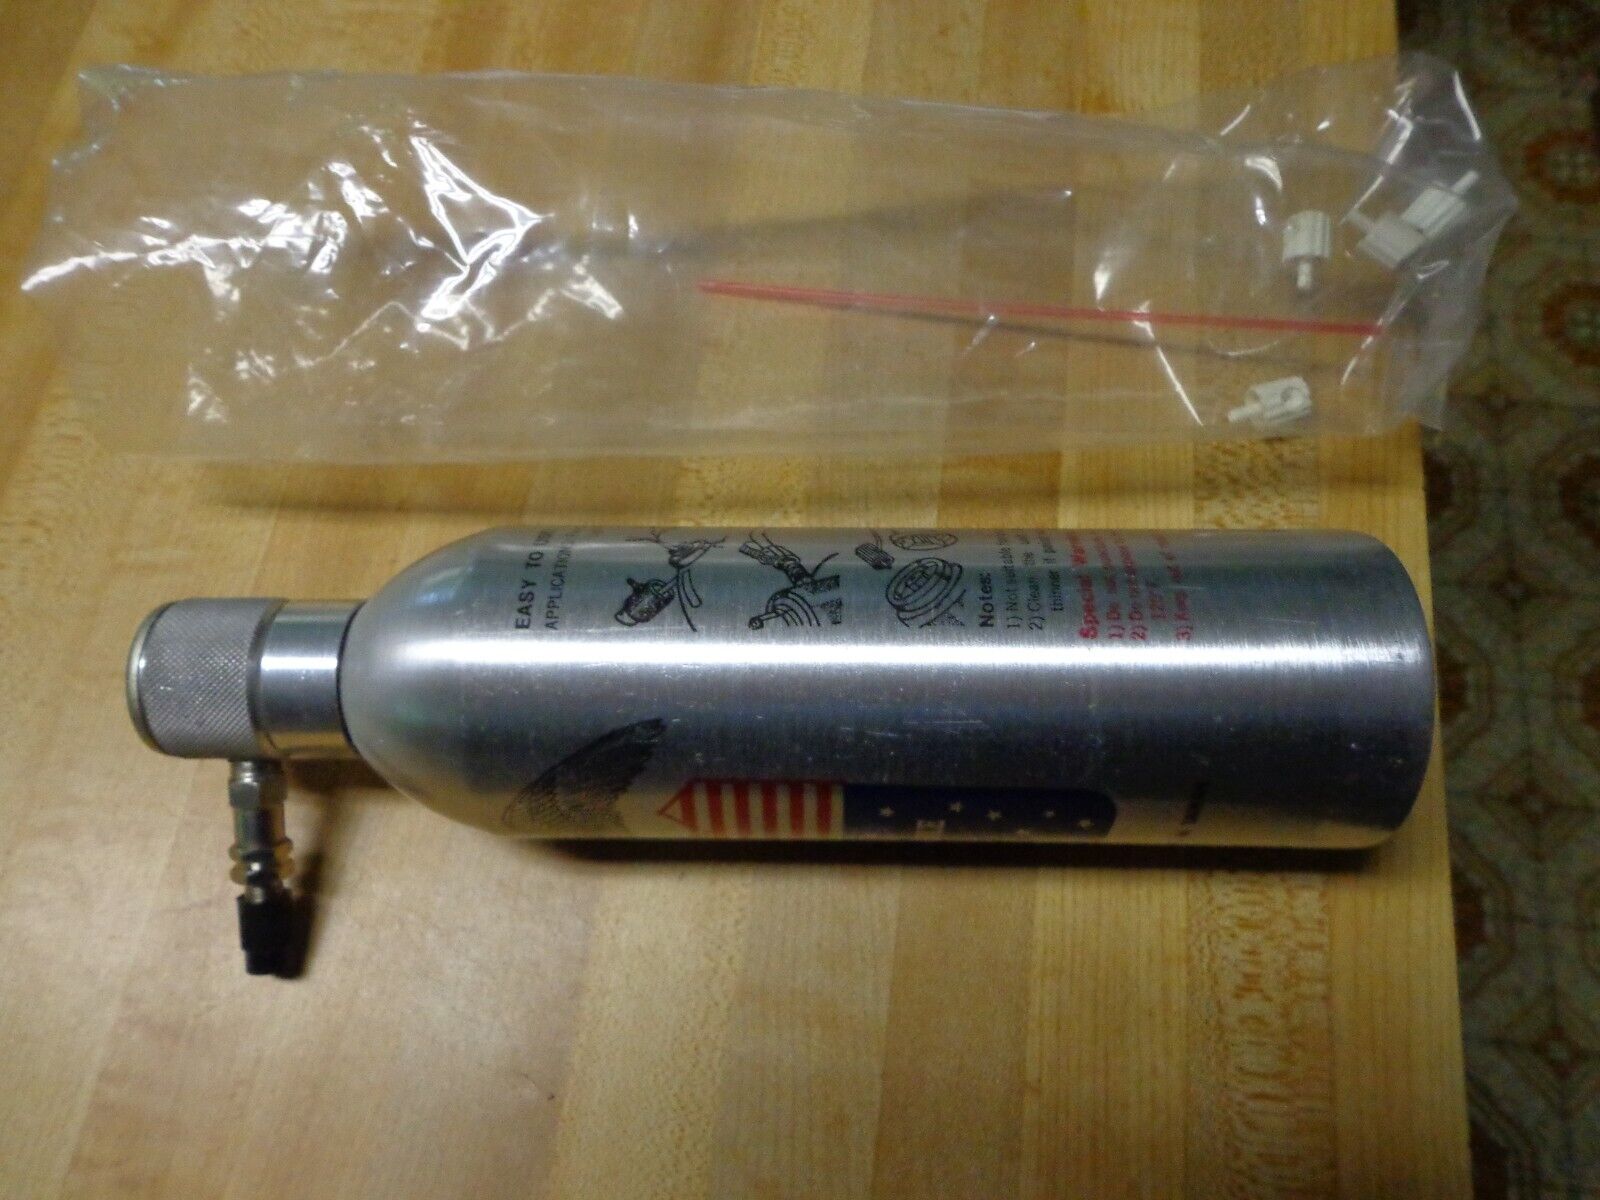 VTG Rechargeable Aerosol Spray Can 1102 - Open Box